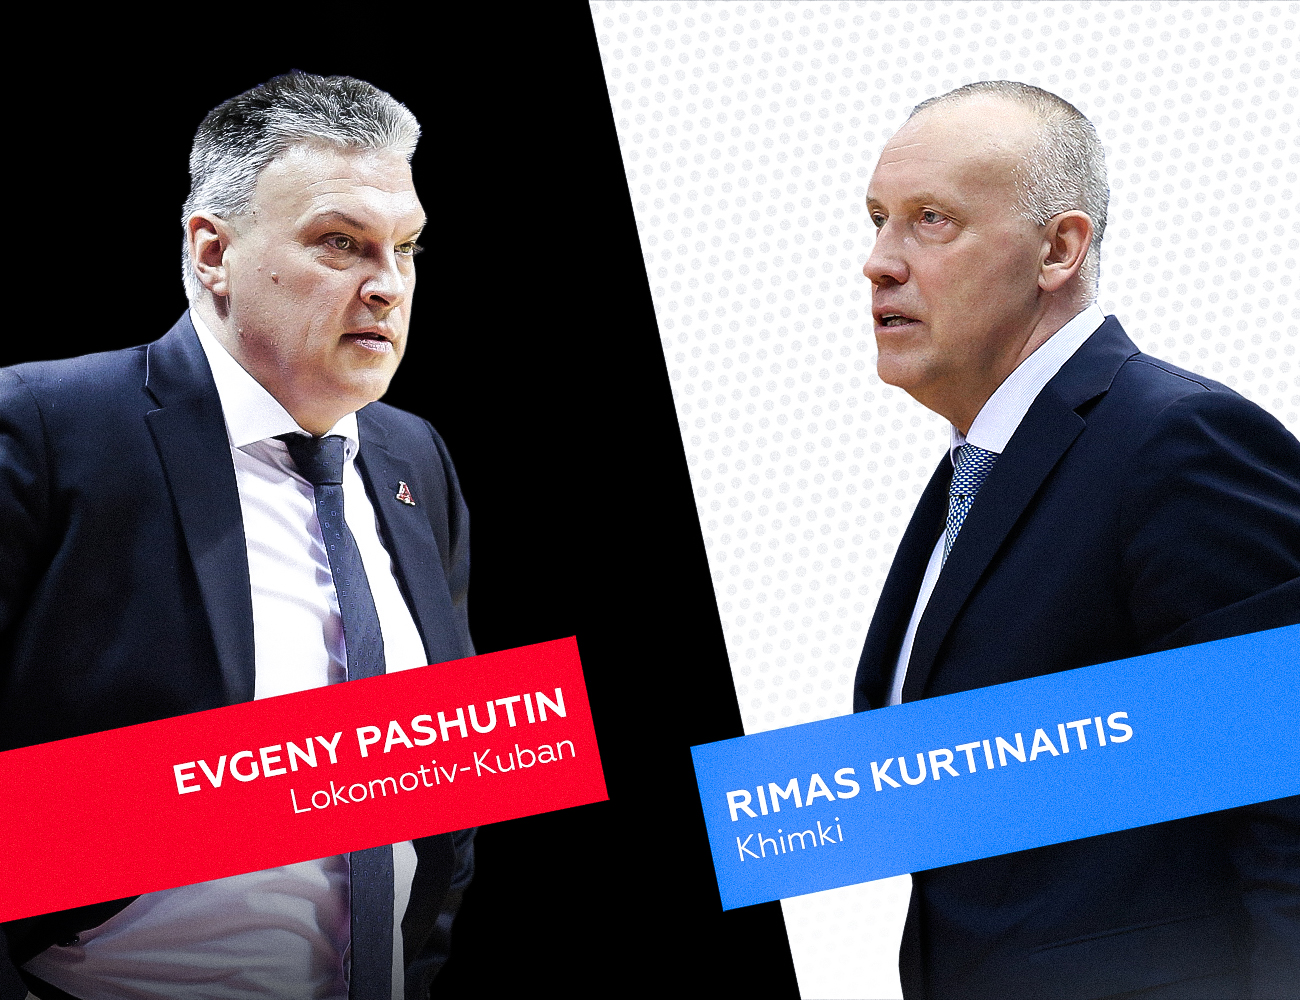 Evgeny Pashutin and Rimas Kurtinaitis will be All-Star Game head coaches